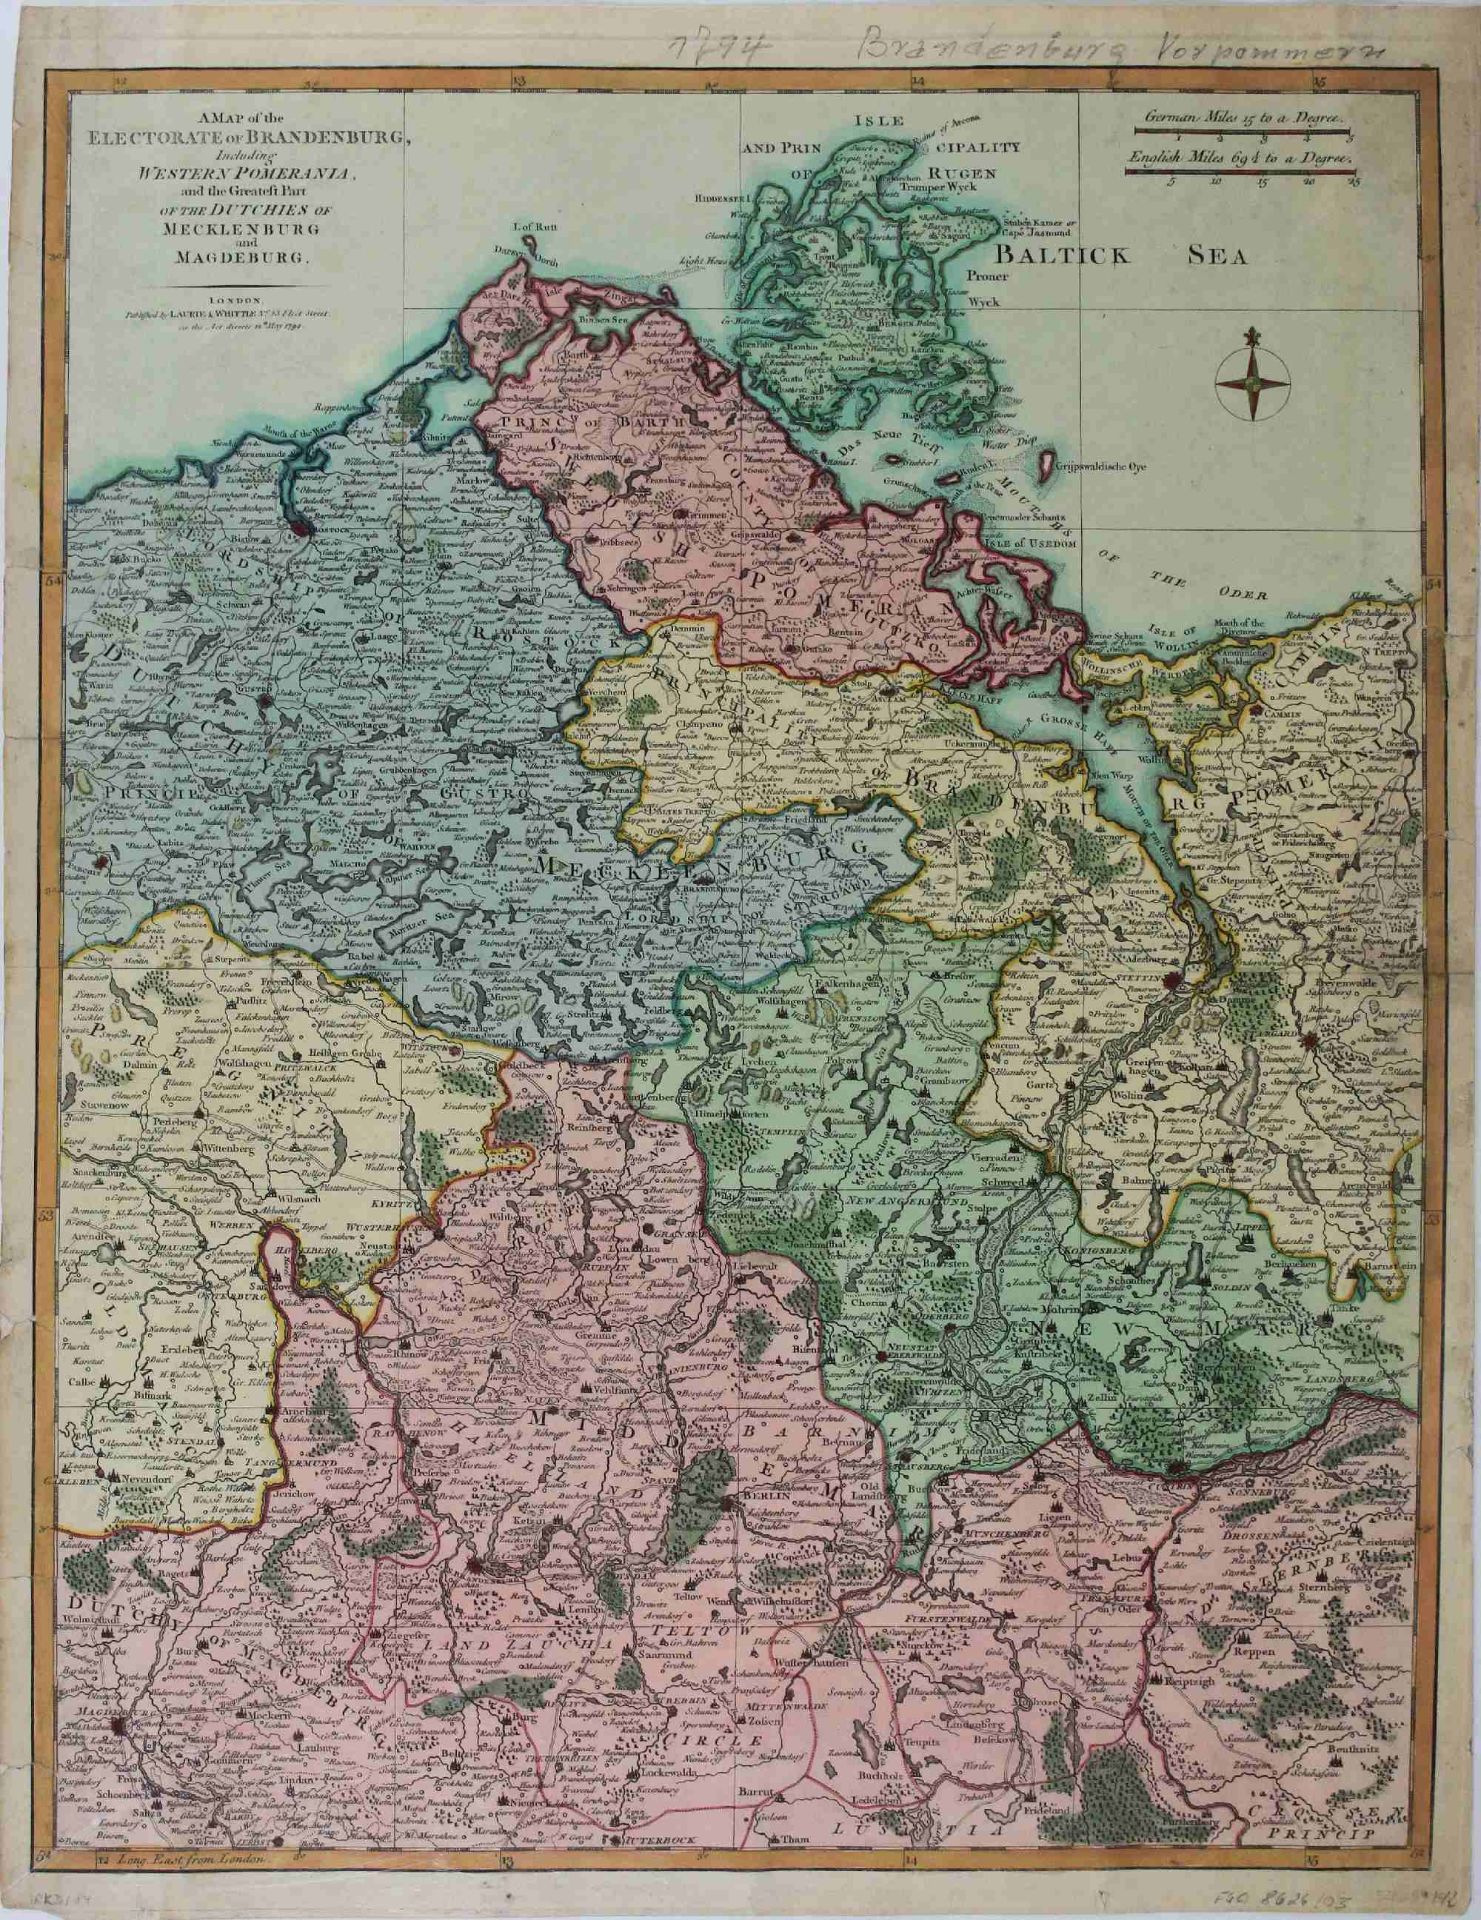 A Map of the Electorate of Brandenburg, including Western Pomerania, 1794